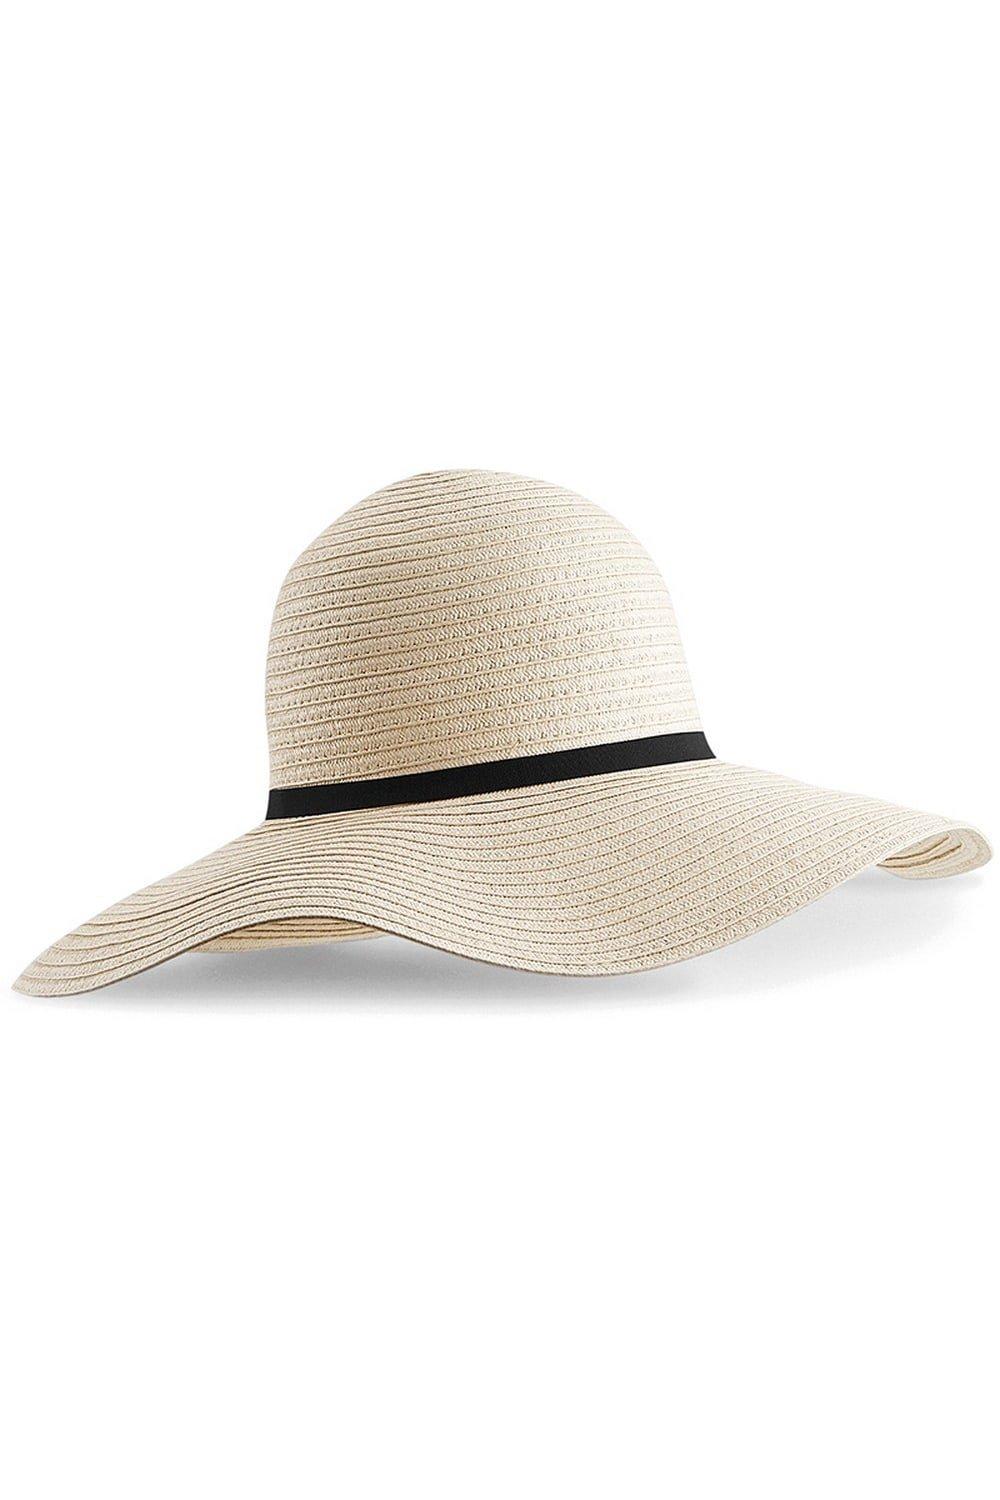 Широкополая шляпа от солнца Marbella Beechfield, обнаженная